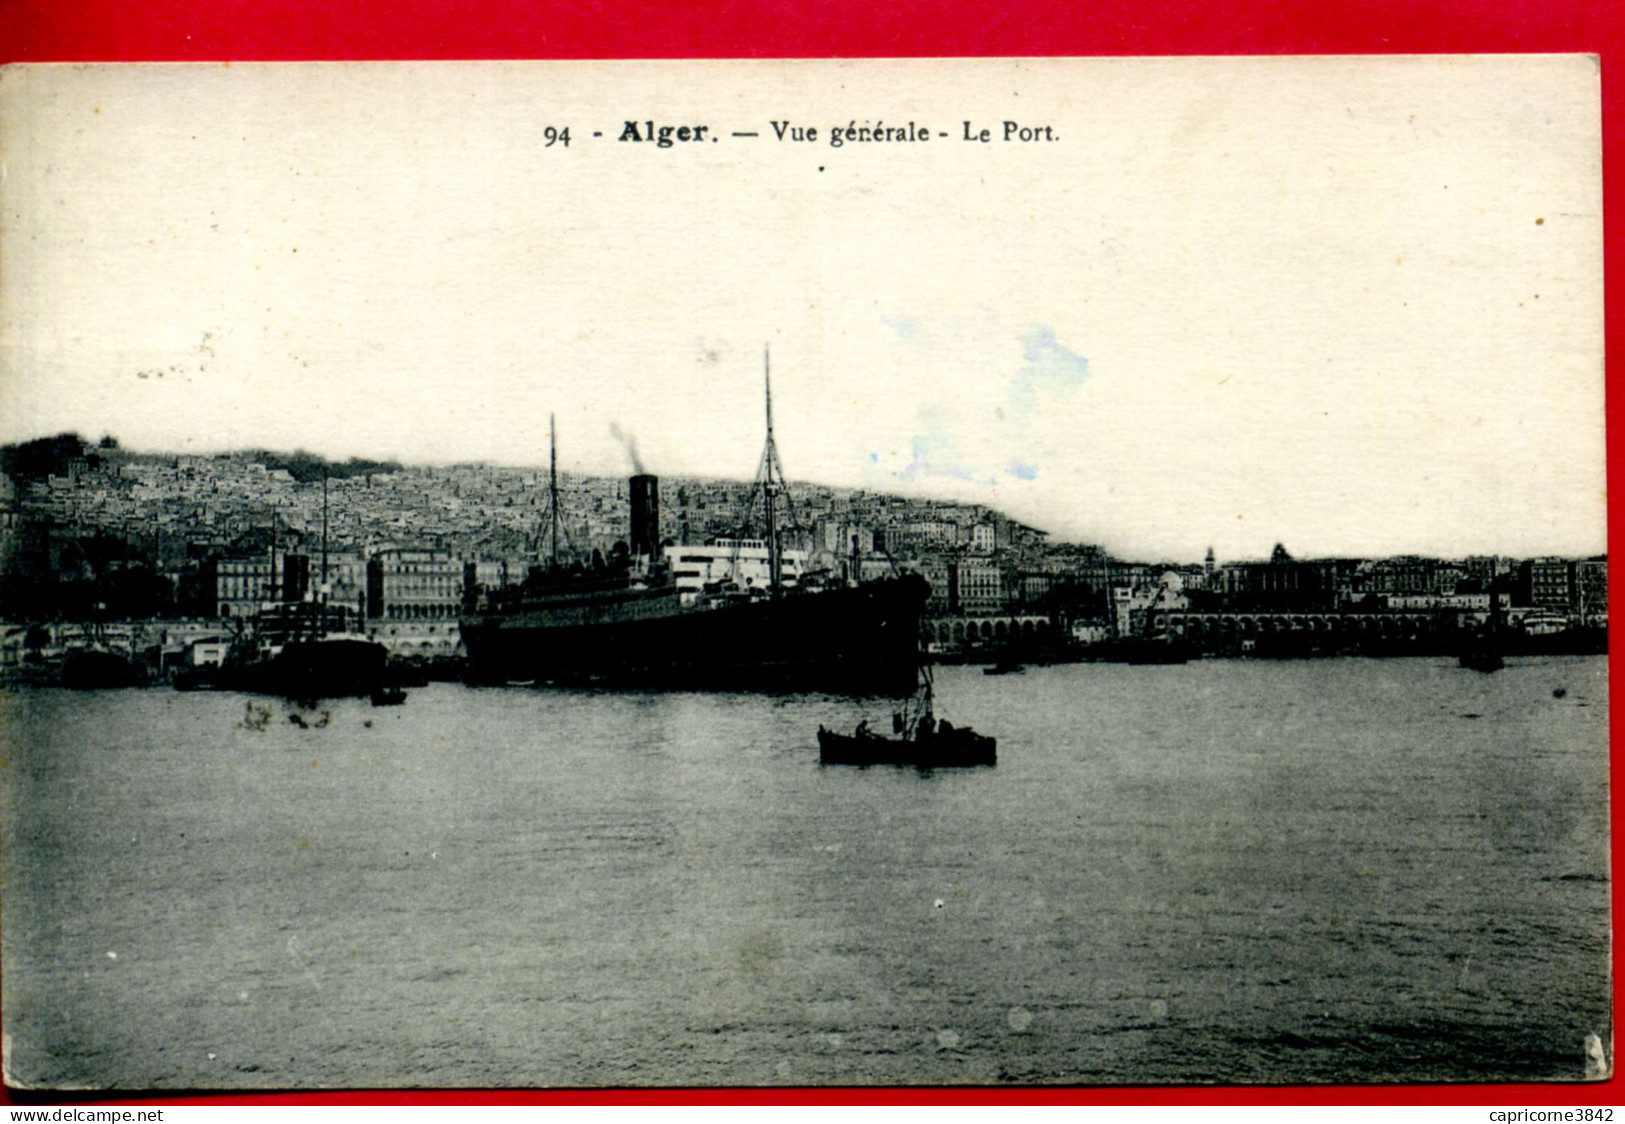 1931 - Algérie - Carte Postale De Constantine Pour Ouargla - Tp N° 45   Mosquée De Abderahmane - Cartas & Documentos